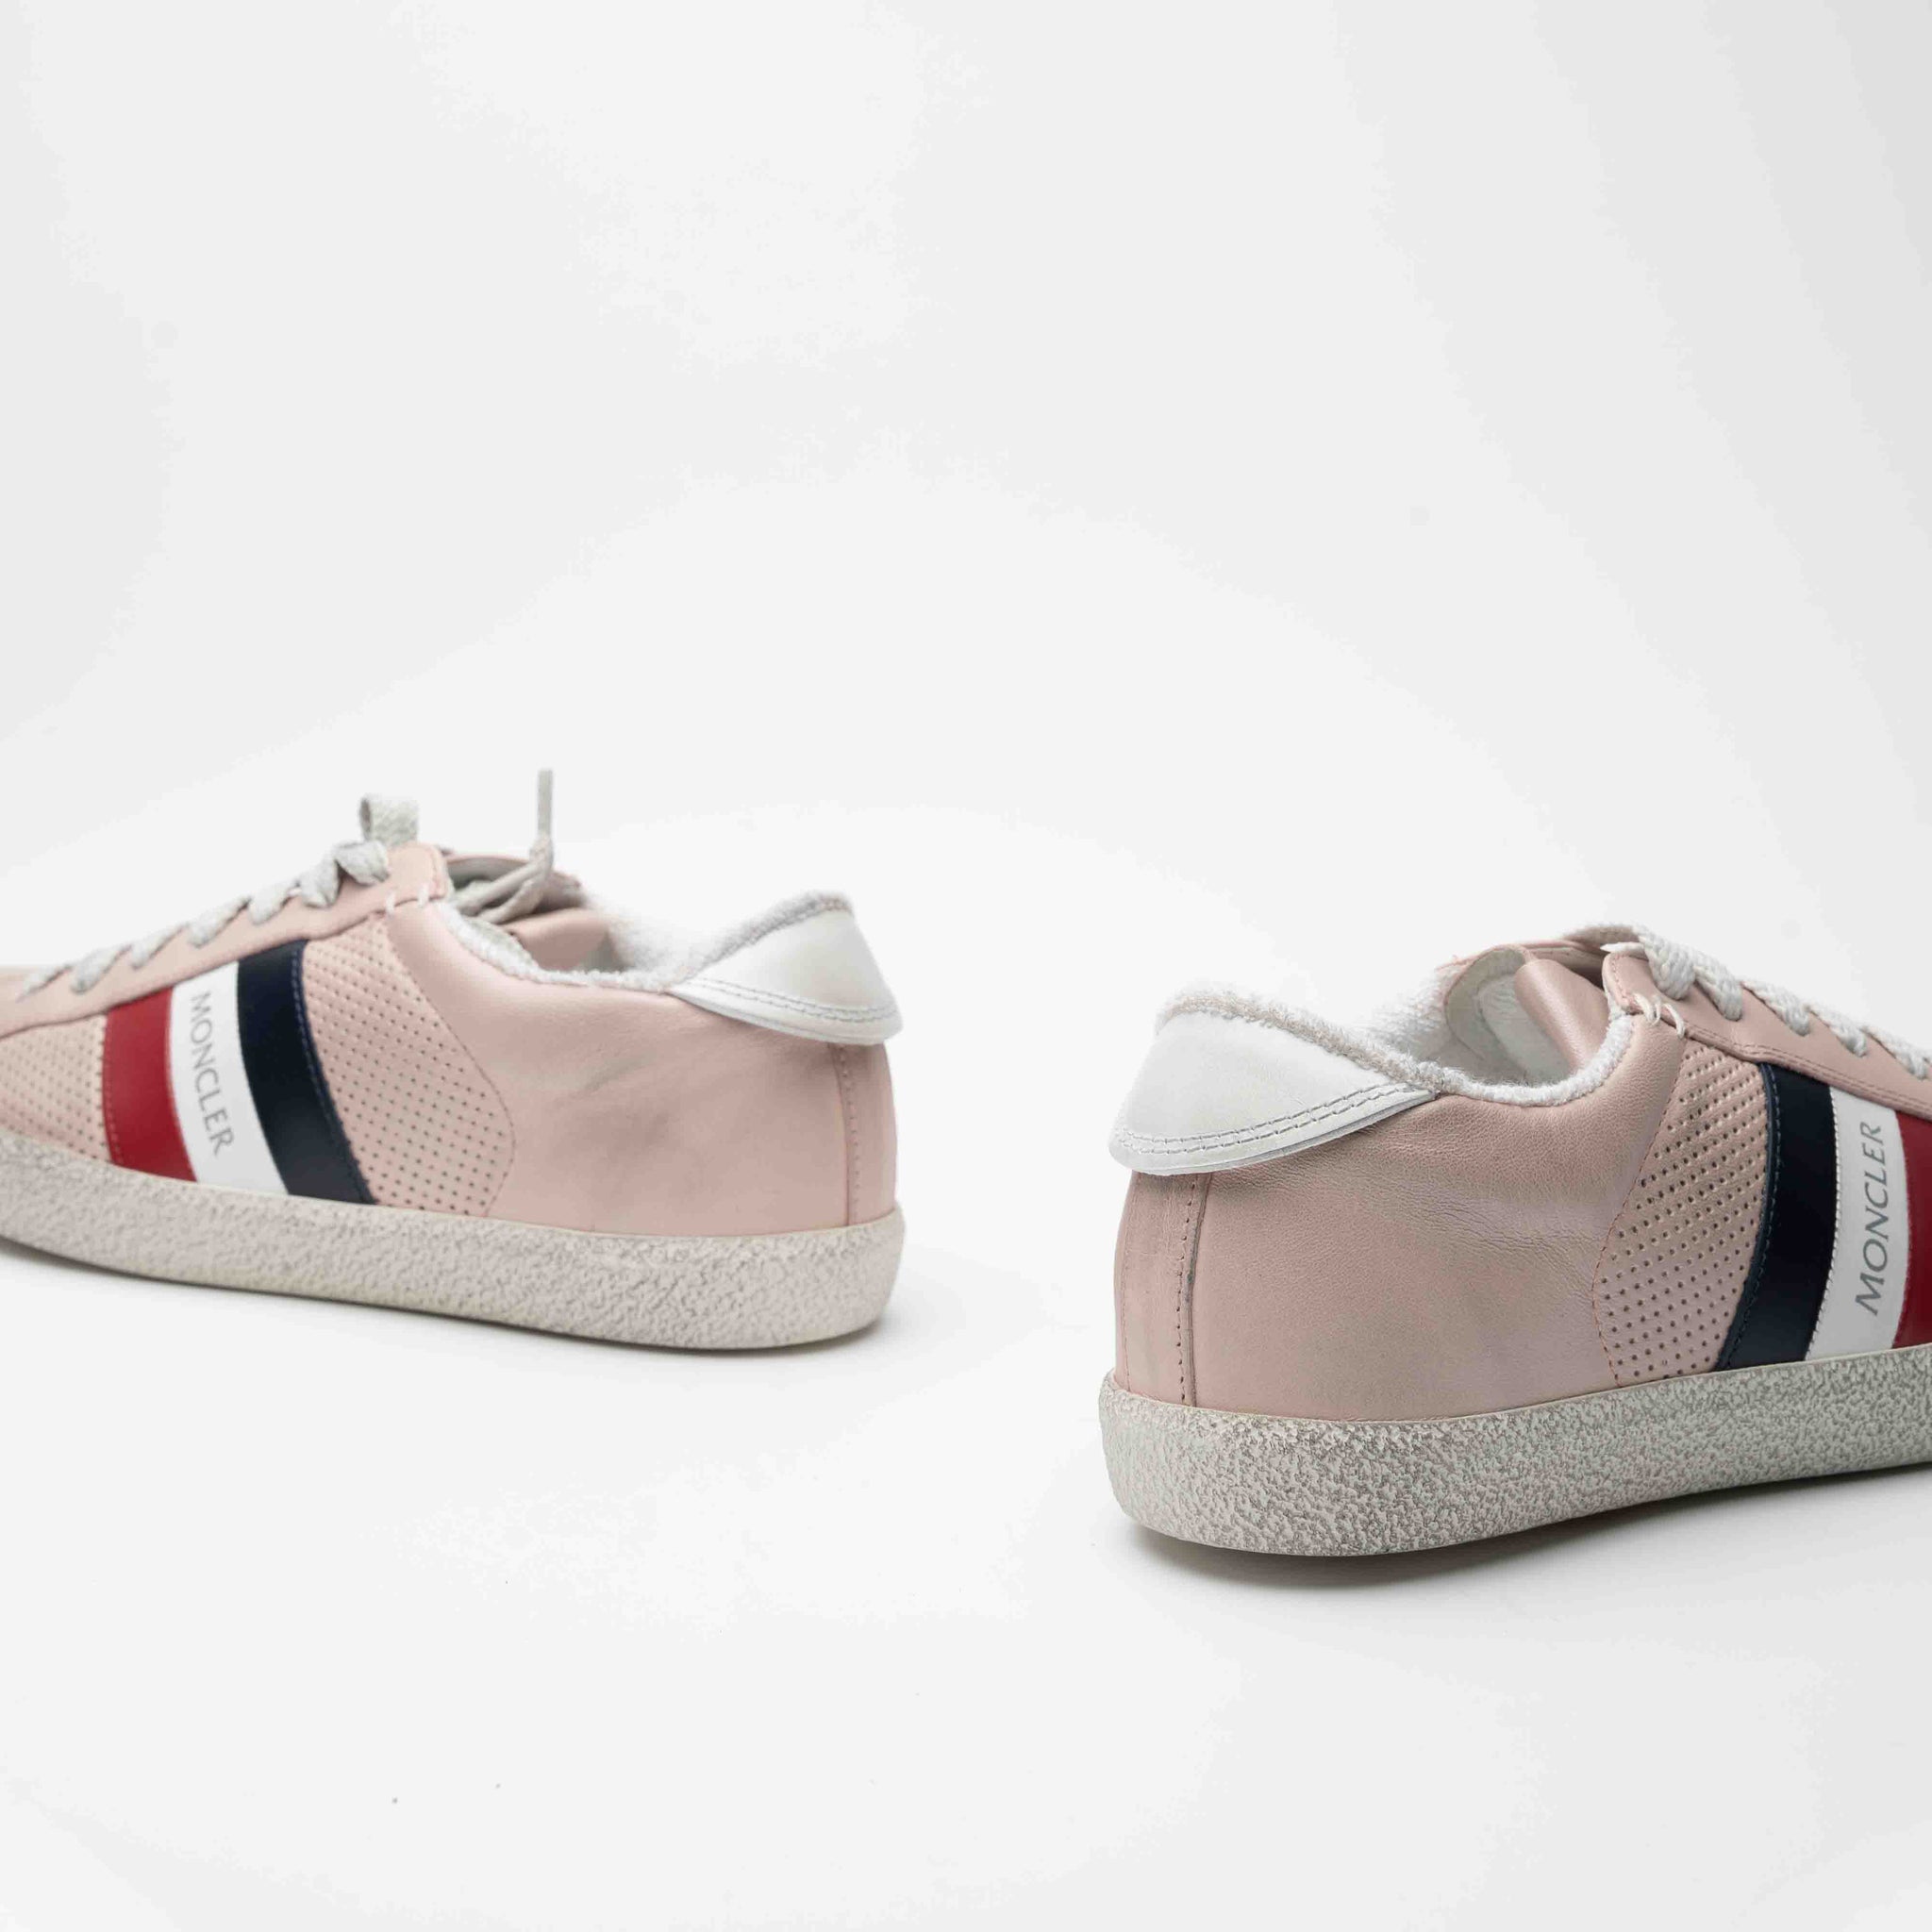 Moncler Ladies Ryegrass Worn Look Sneaker in Pink Size 37